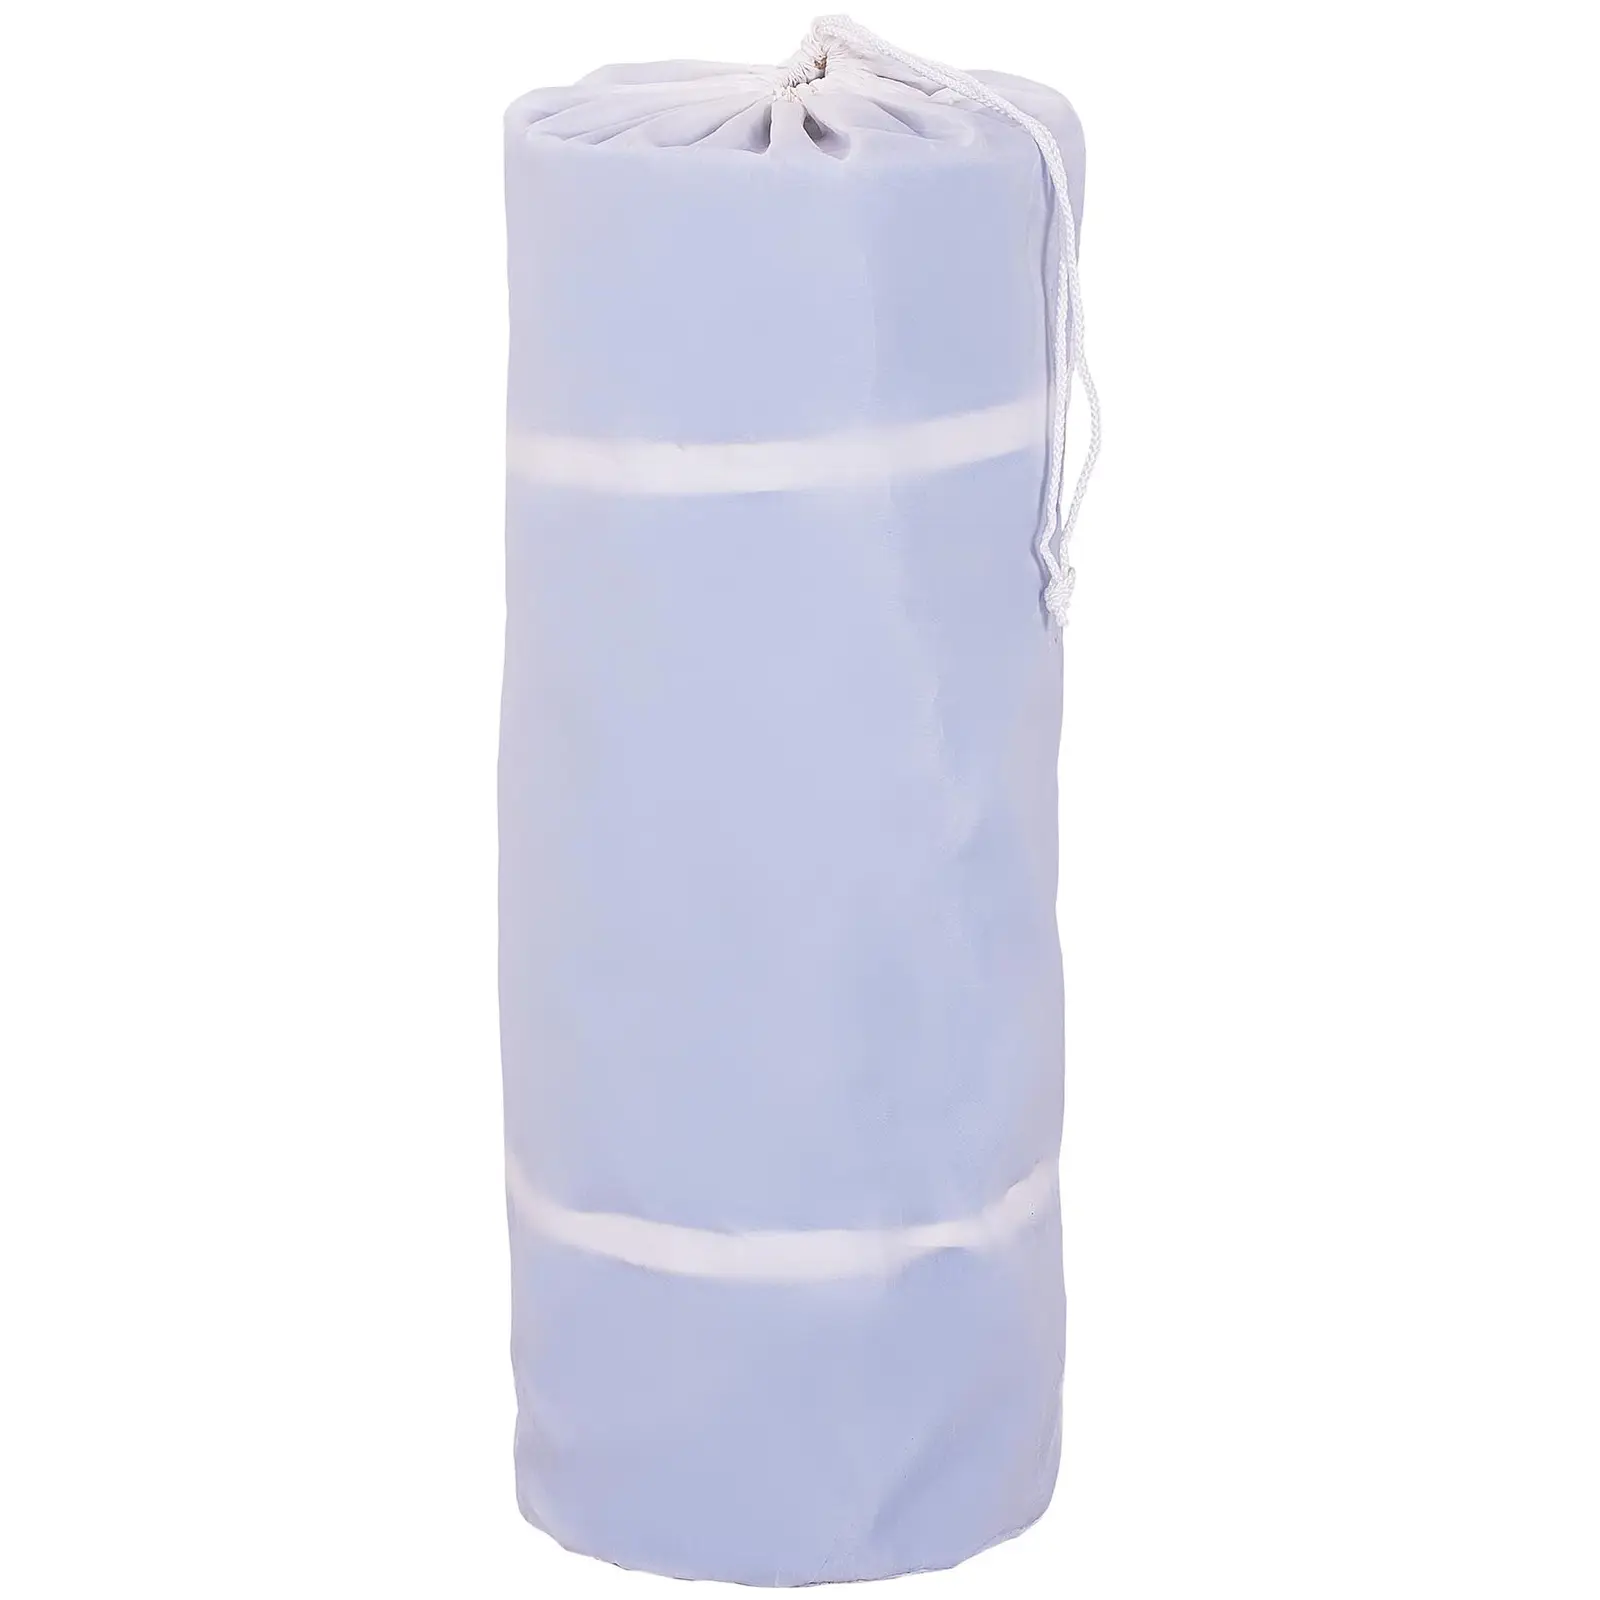 Set tappetino da ginnastica gonfiabile con pompa inclusa - 300 x 100 x 20 cm - 150 kg - blu/bianco